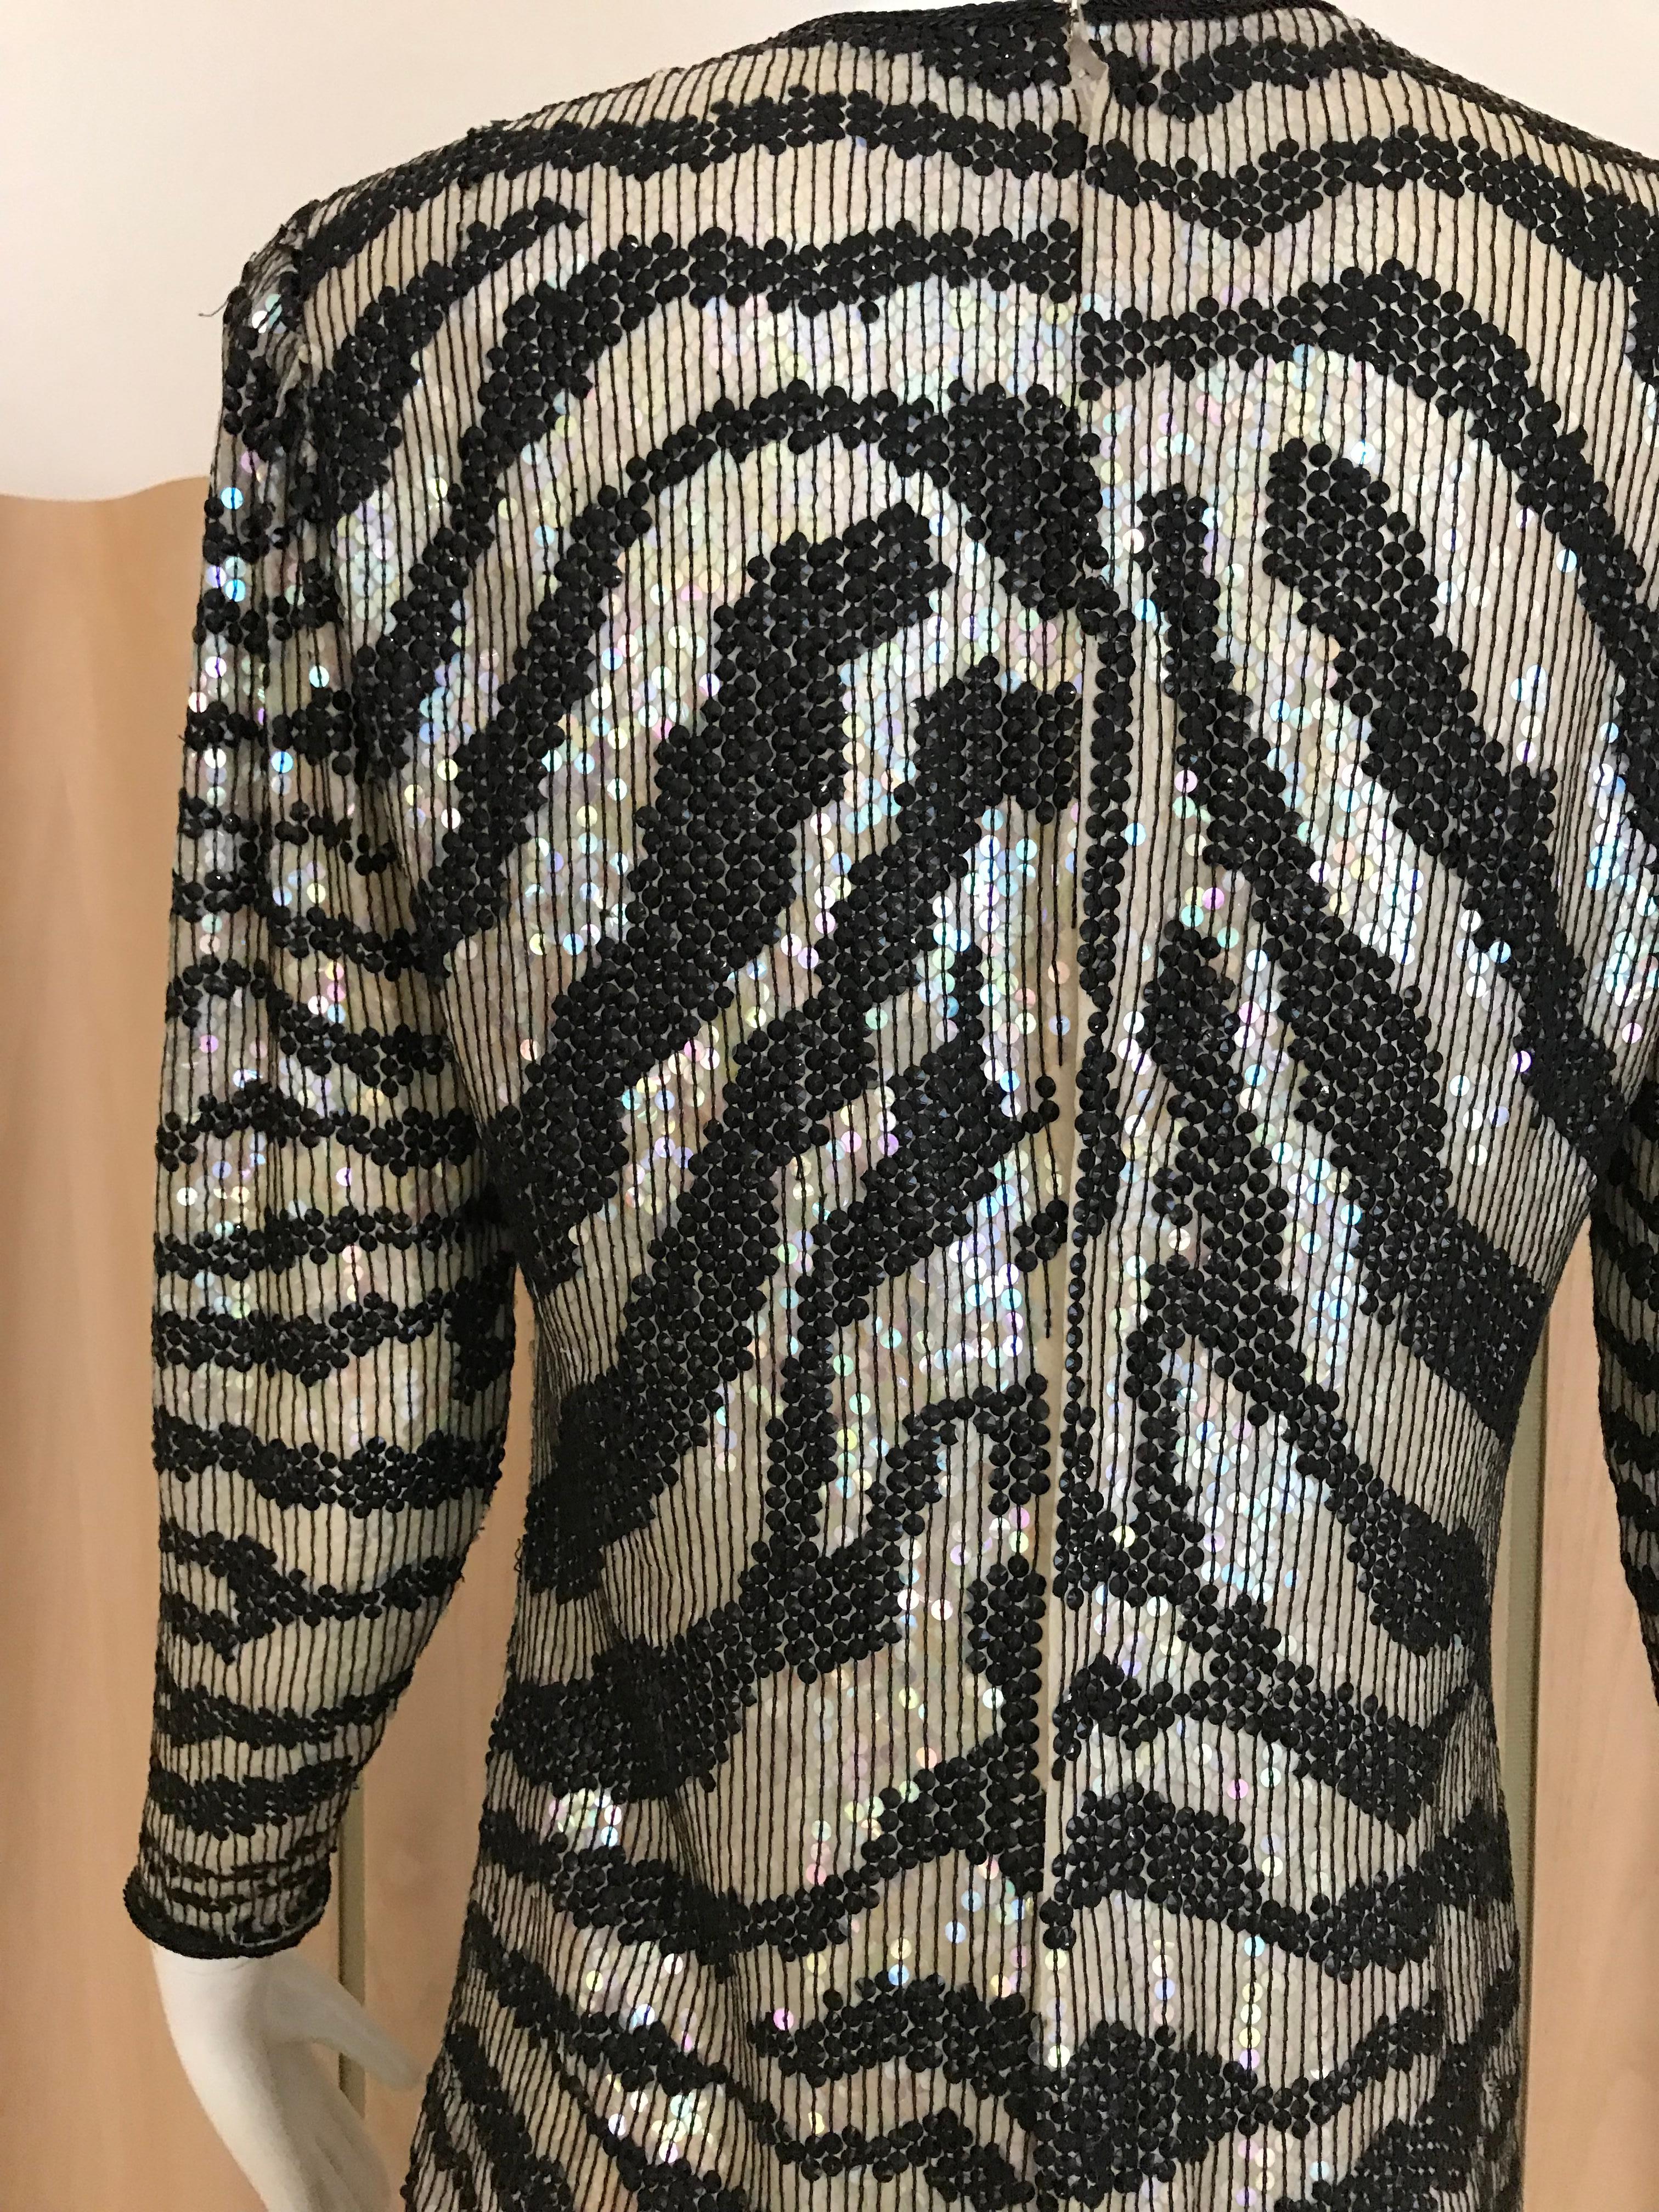 1970s HALSTON Black and Silver Sequins Animal Print Sheath Dress 6